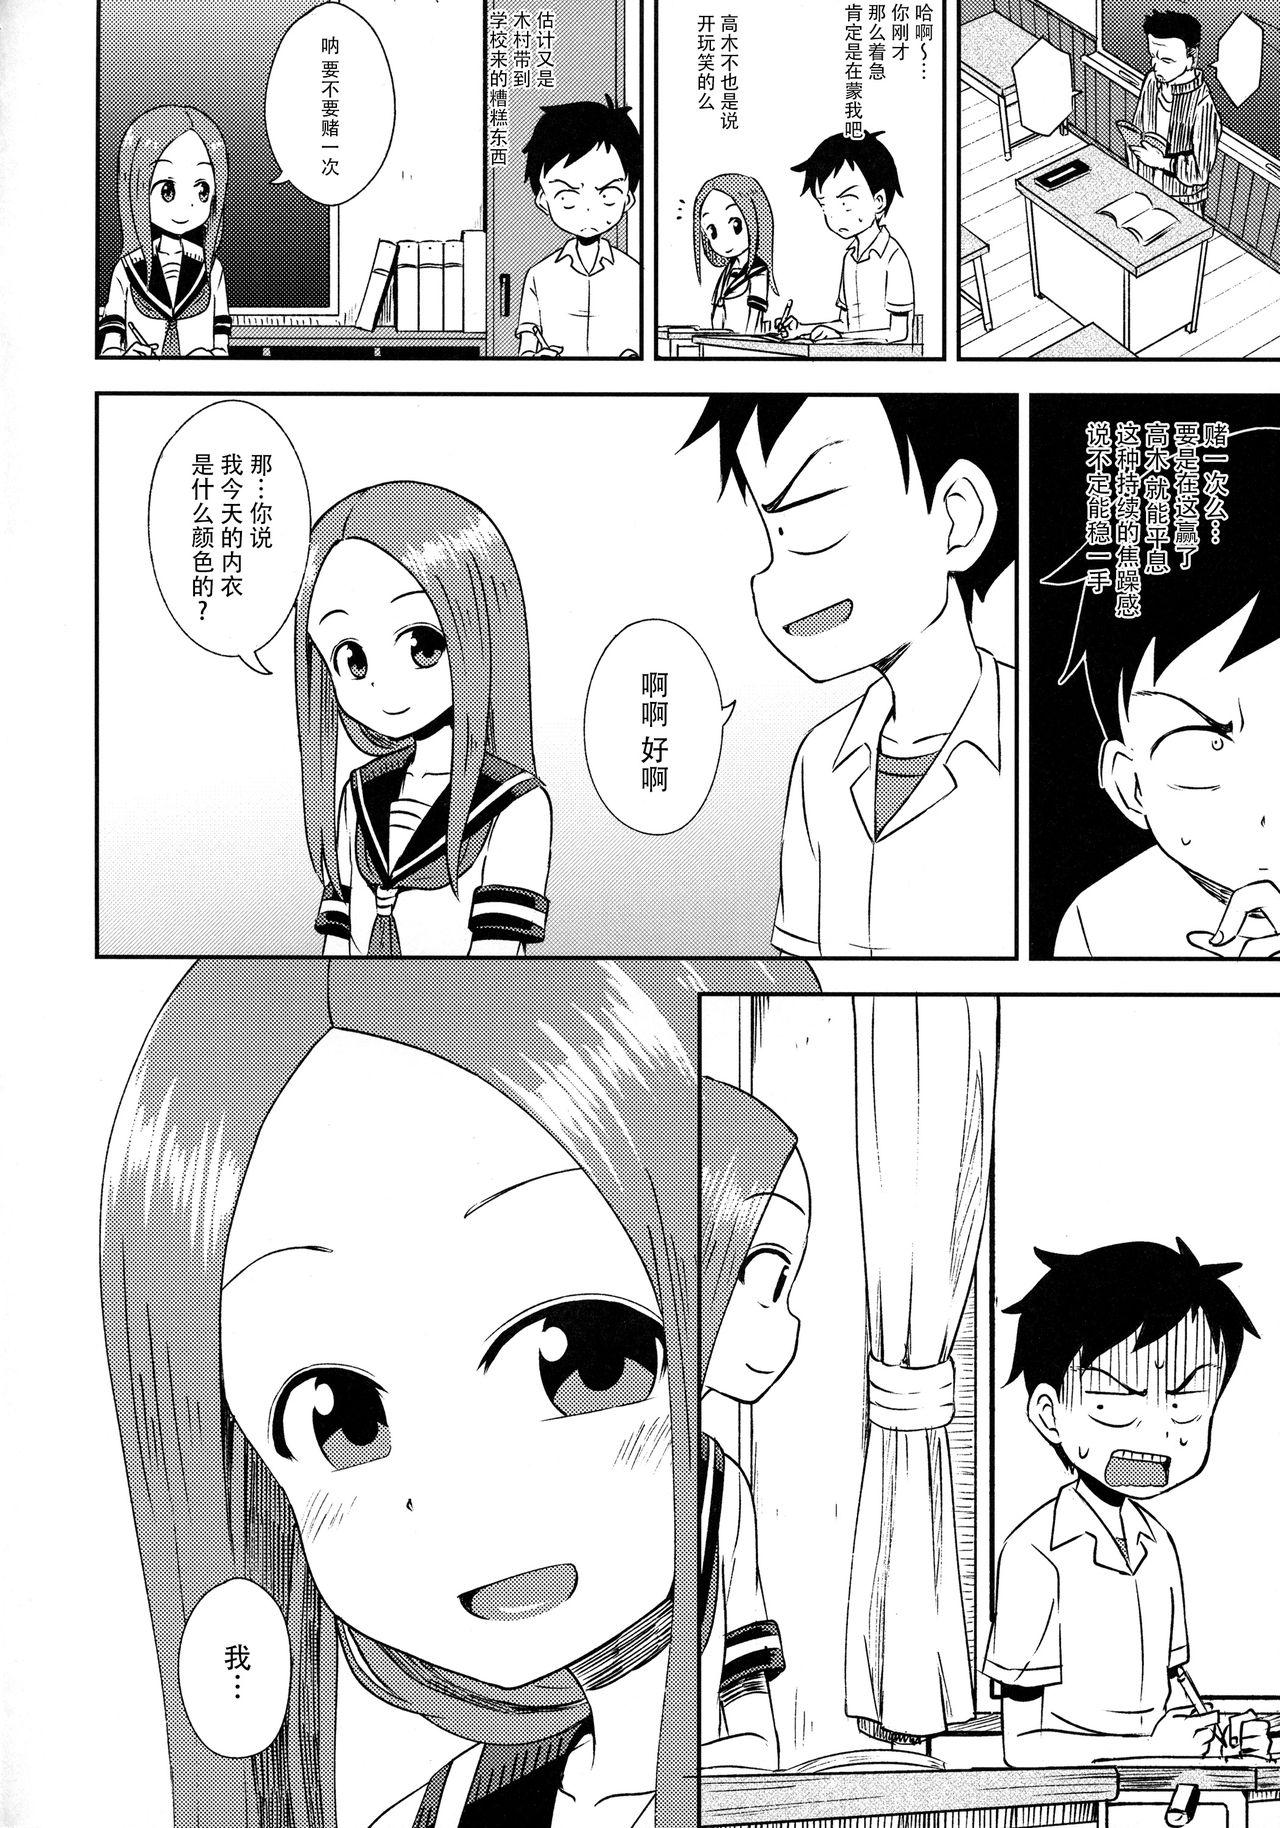 Messy Takagi-san escalate - Karakai jouzu no takagi-san Girlsfucking - Page 6